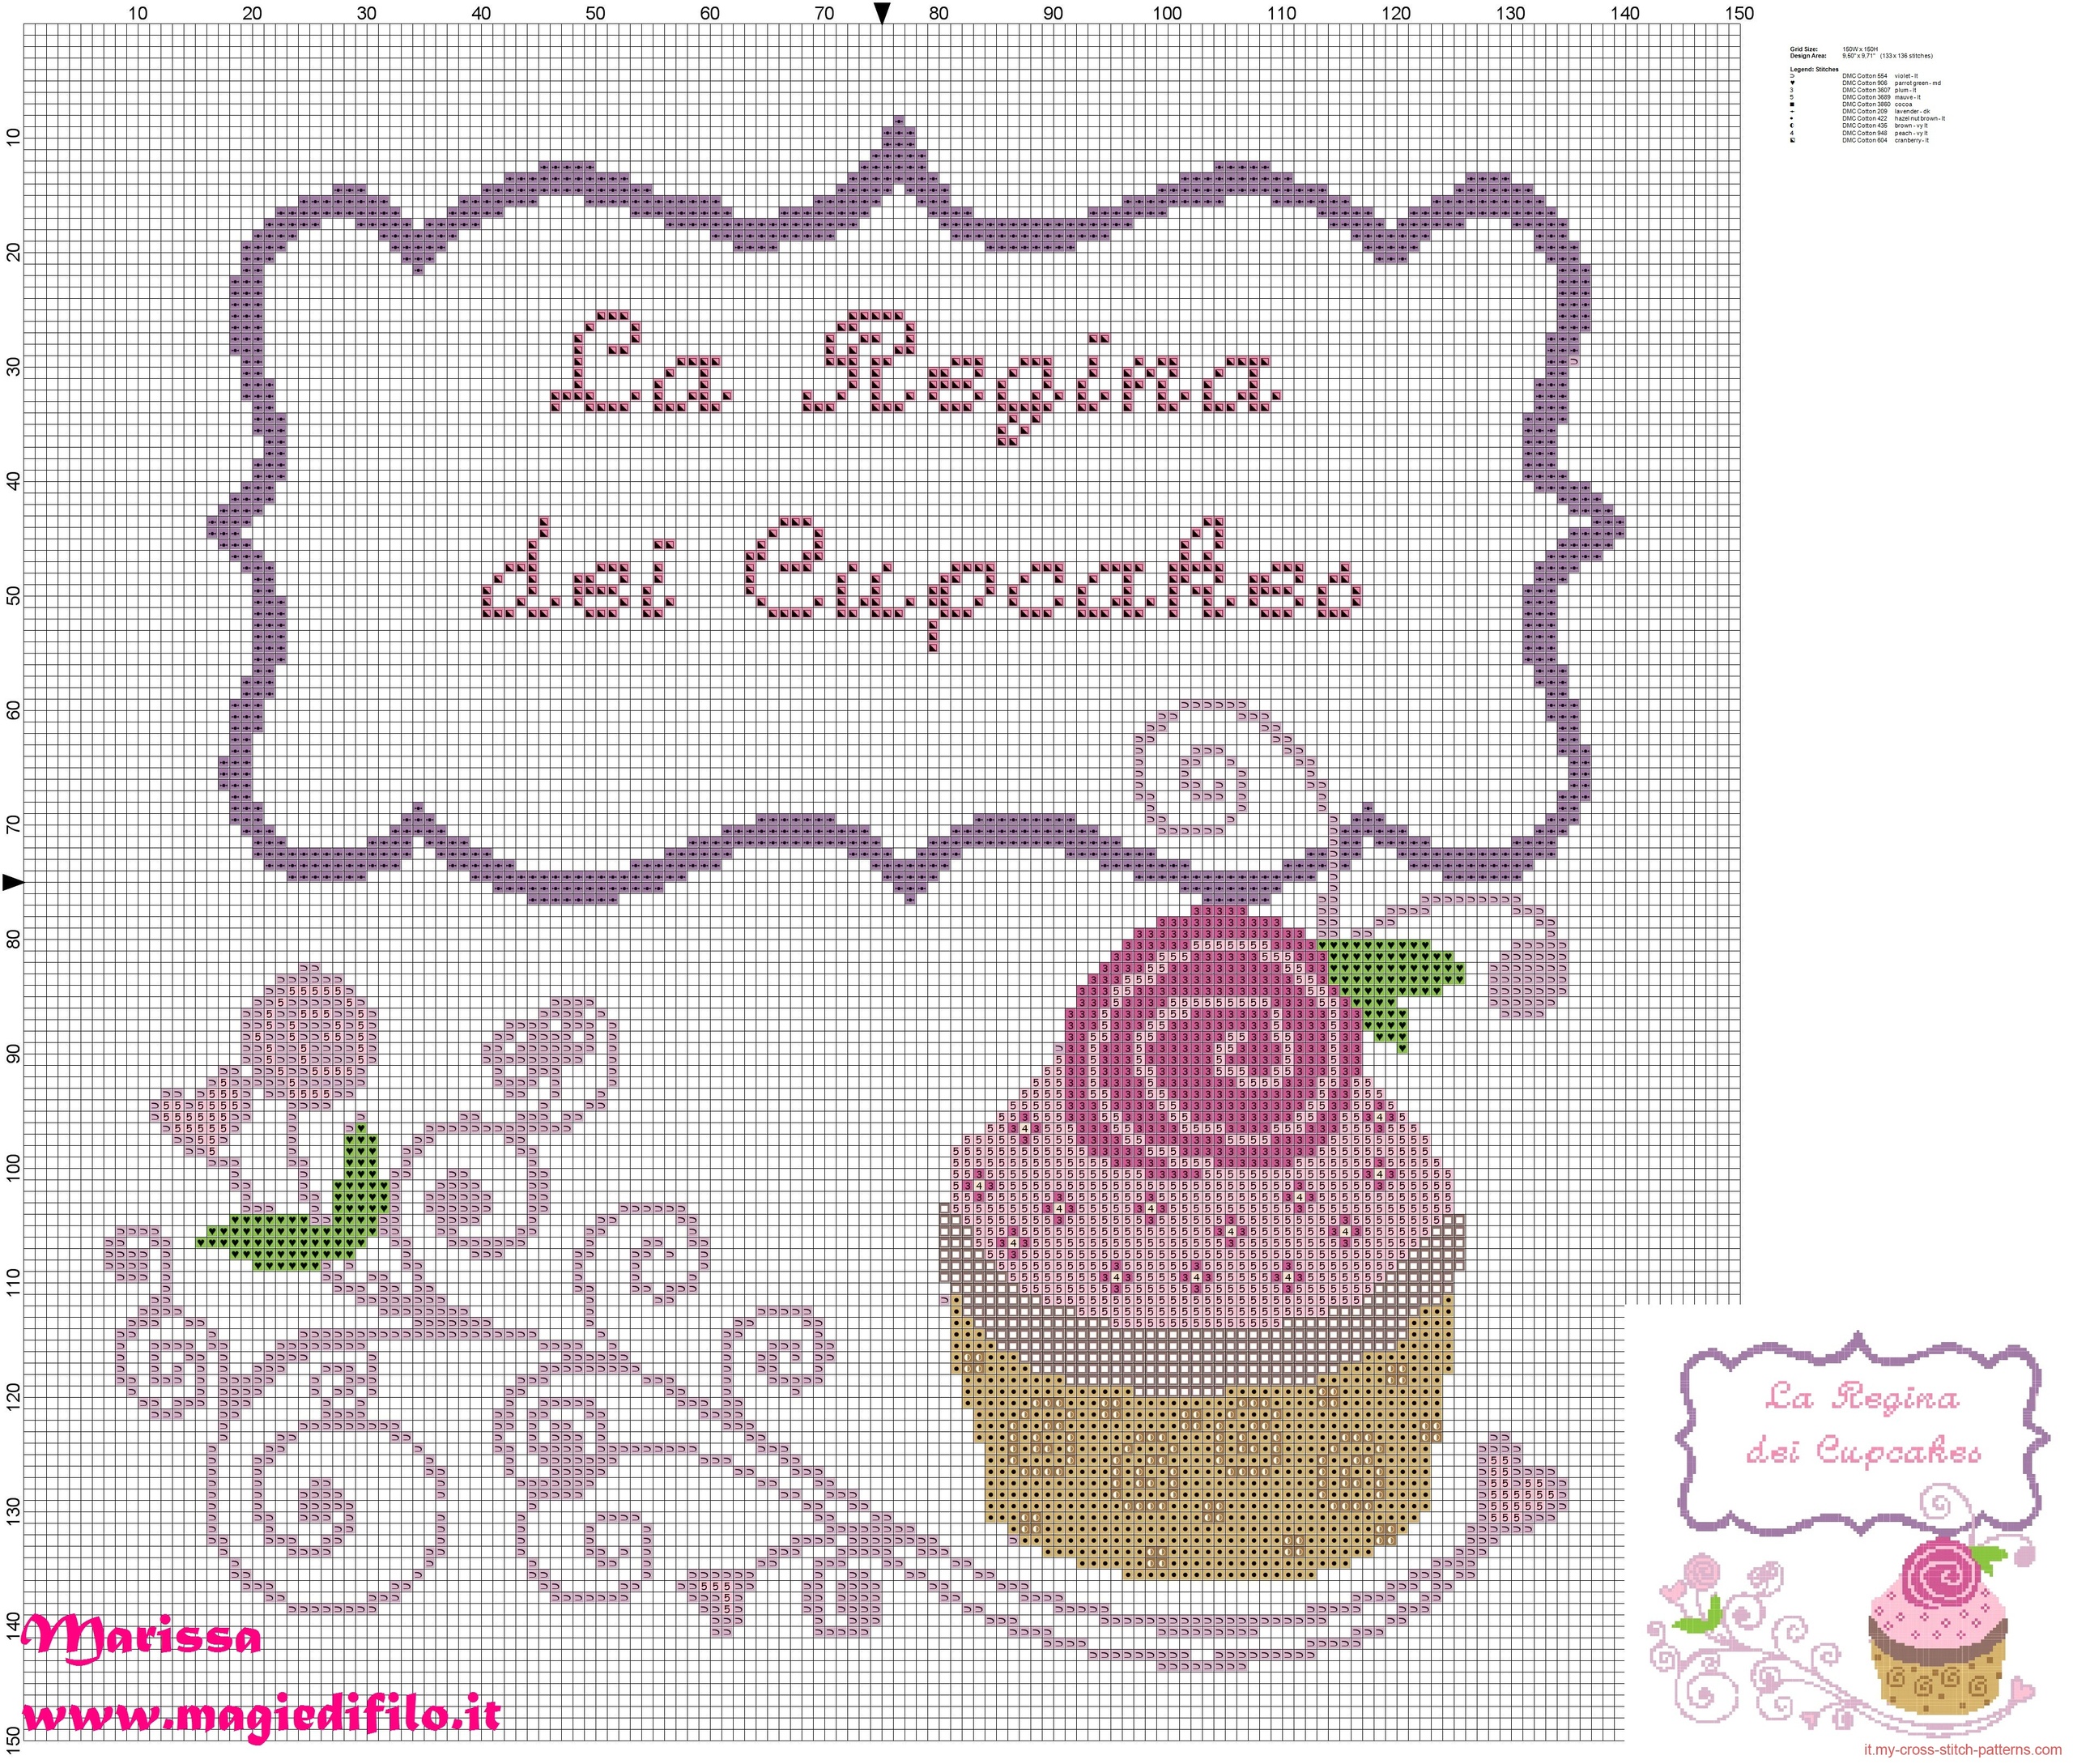 la_regina_dei_cupcakes